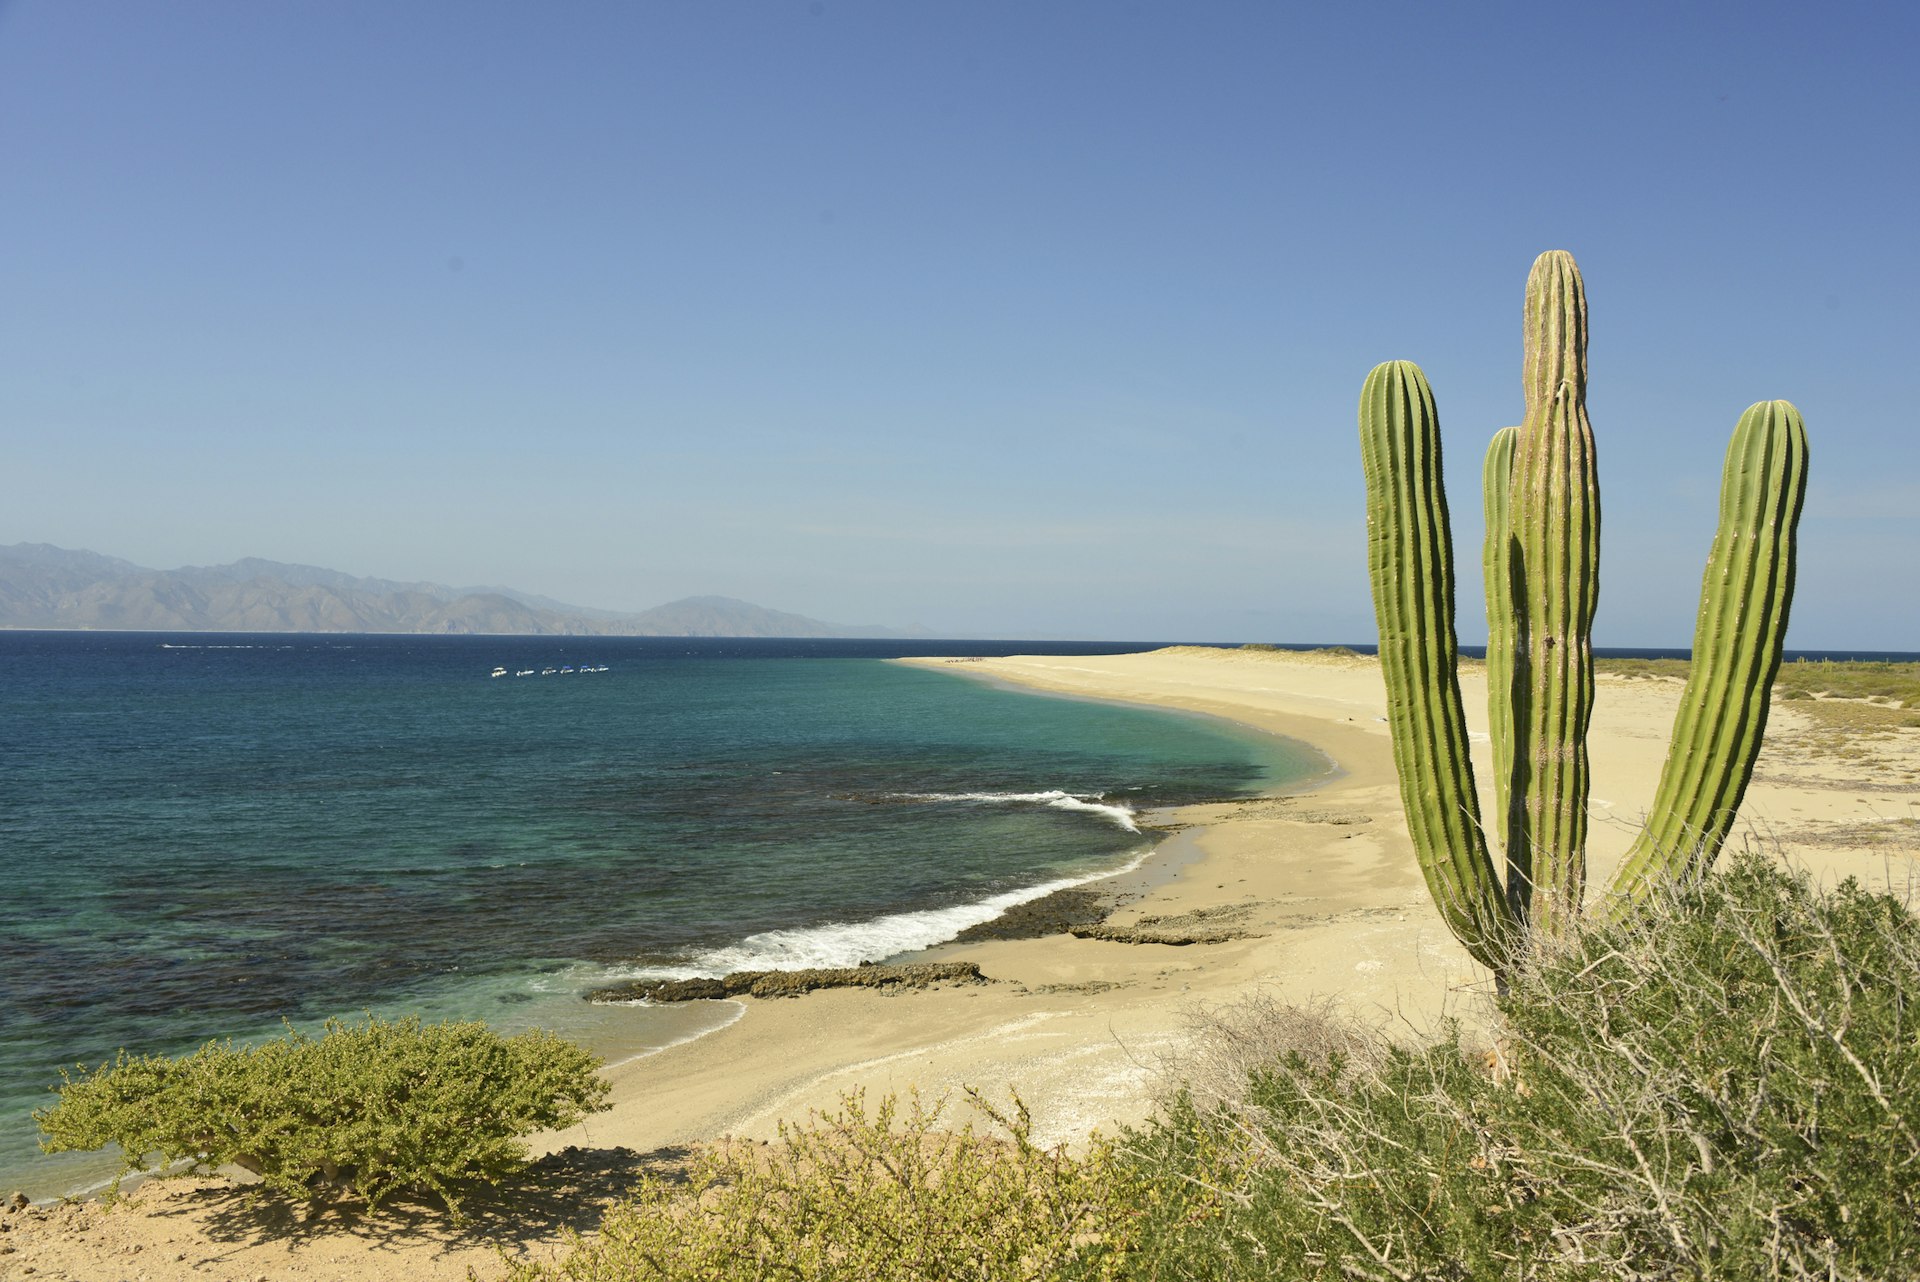 Cactus plant and sandy beach on island in the Sea of Cortez on the Baja California Peninsula near La Paz Mexico